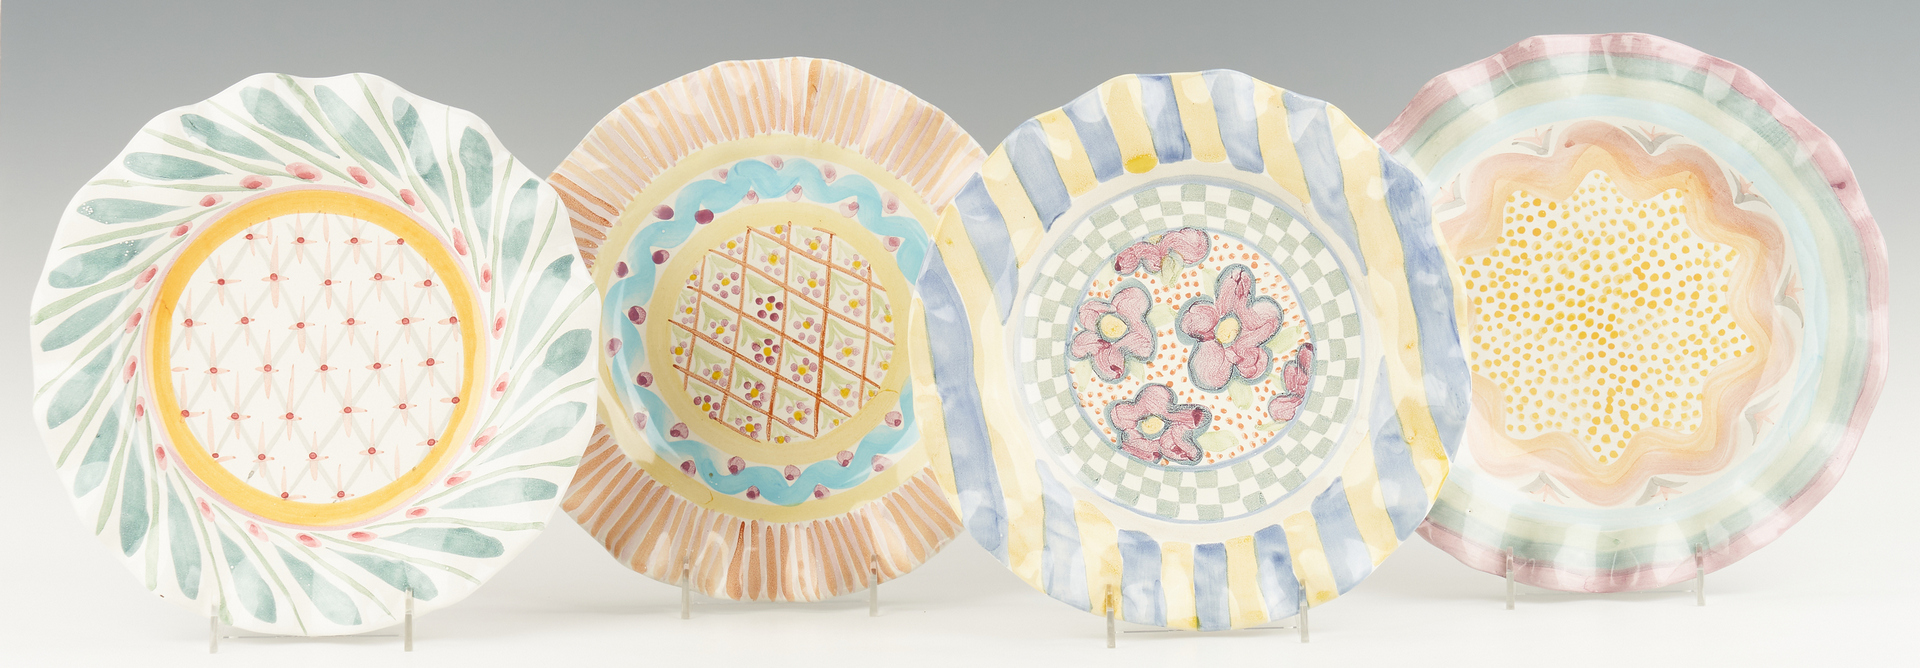 Lot 895: 16 Mackenzie-Childs Ceramic, Glass & Other Items